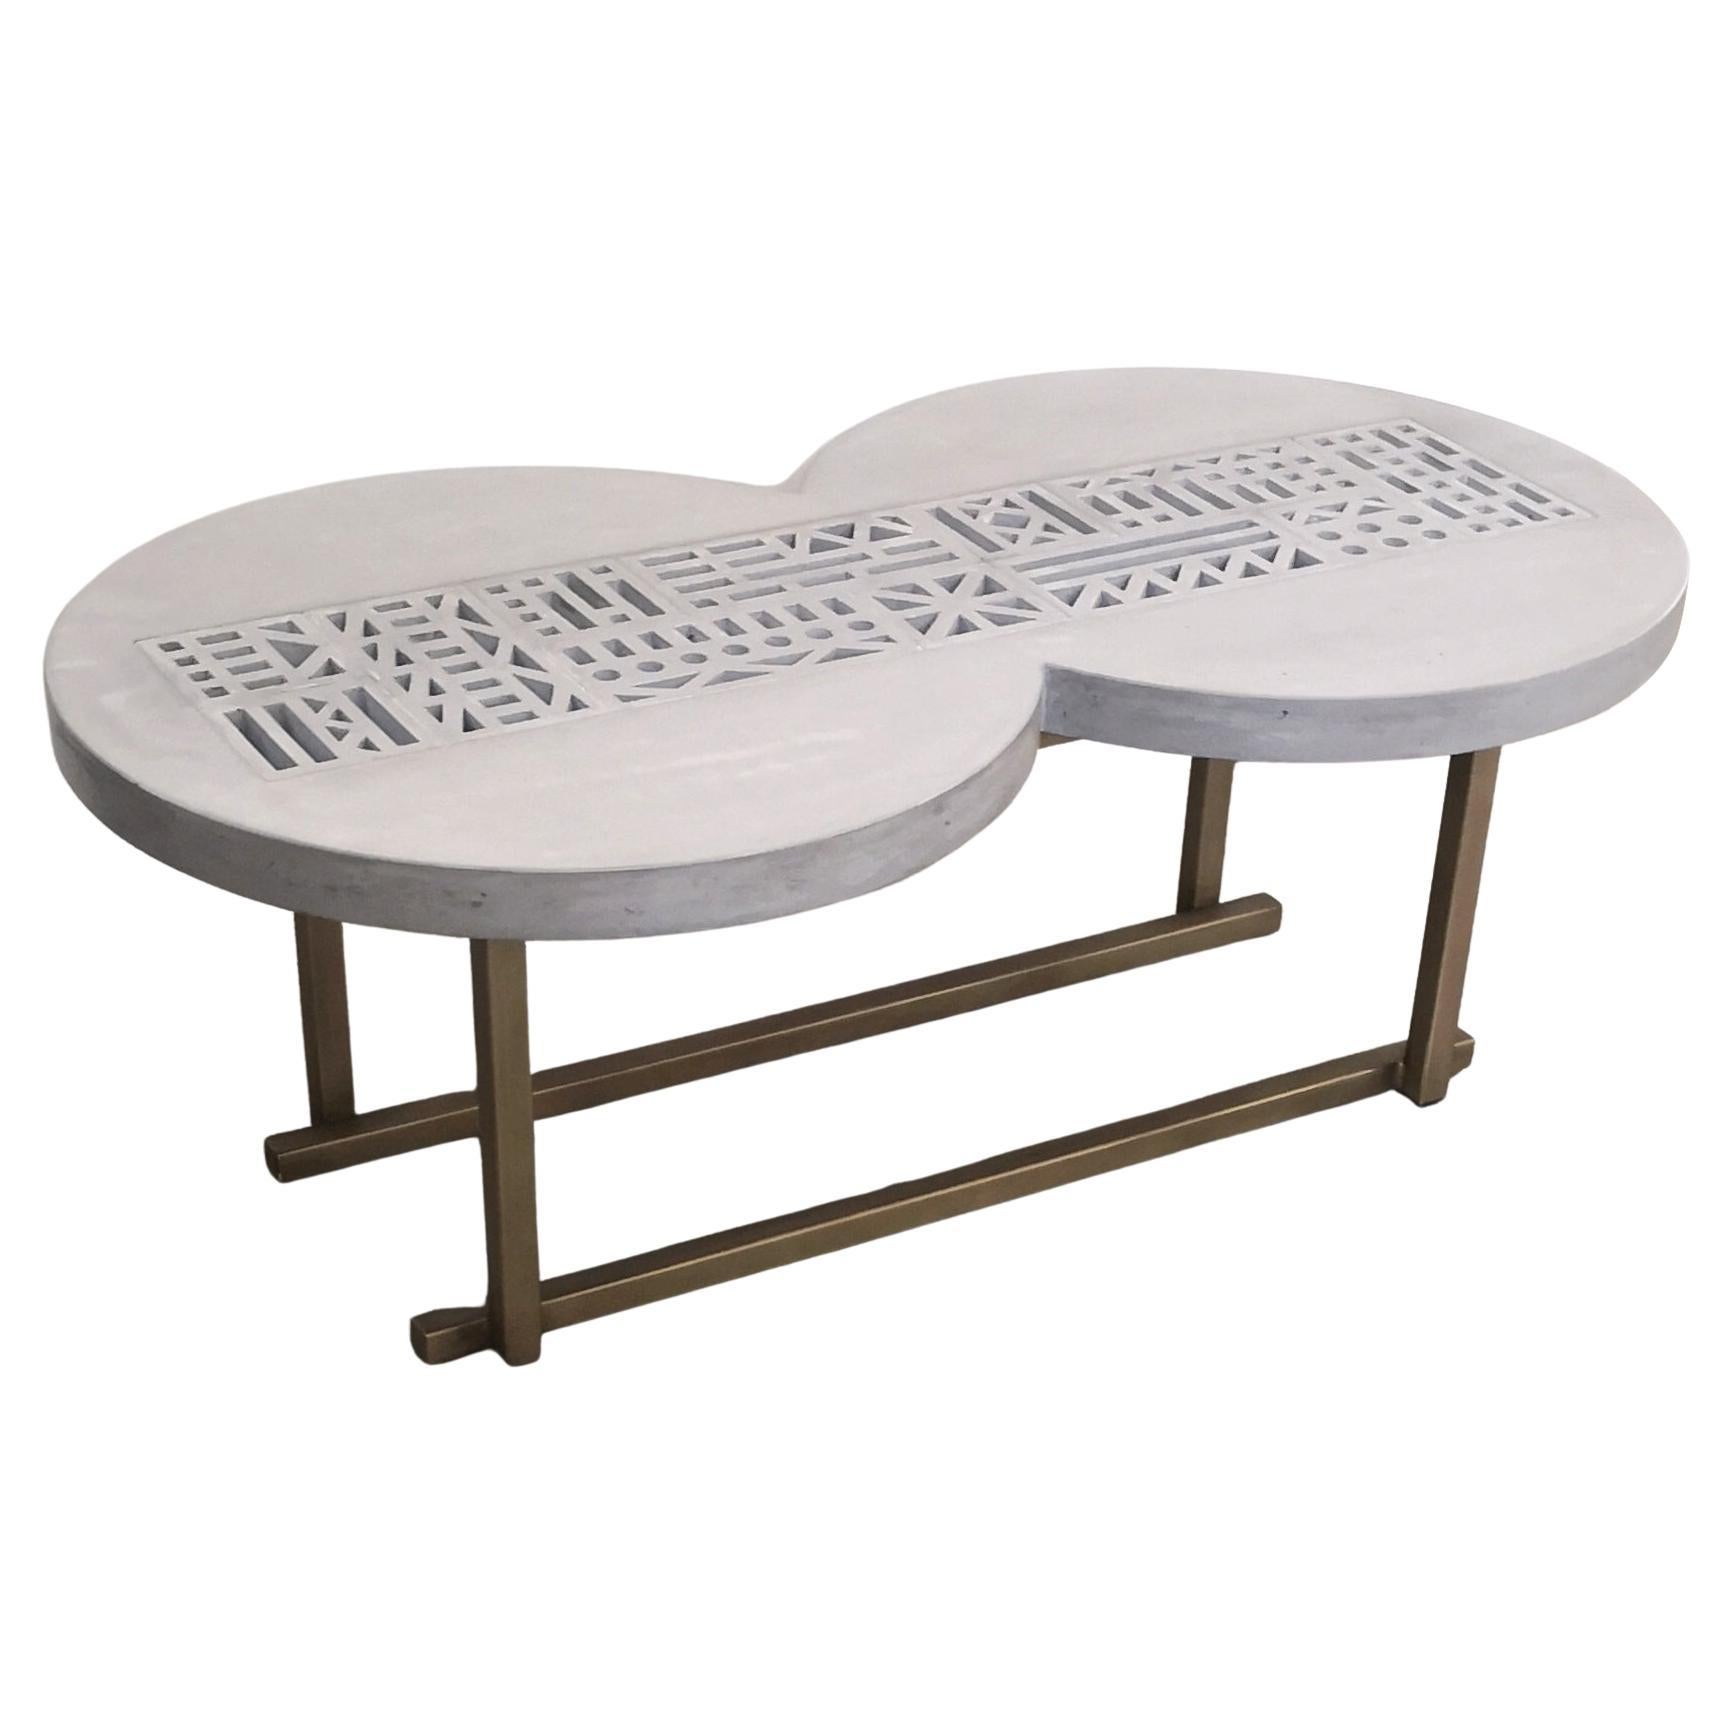 Nostradamus concrete coffee table design Roberto Giacomucci 2018